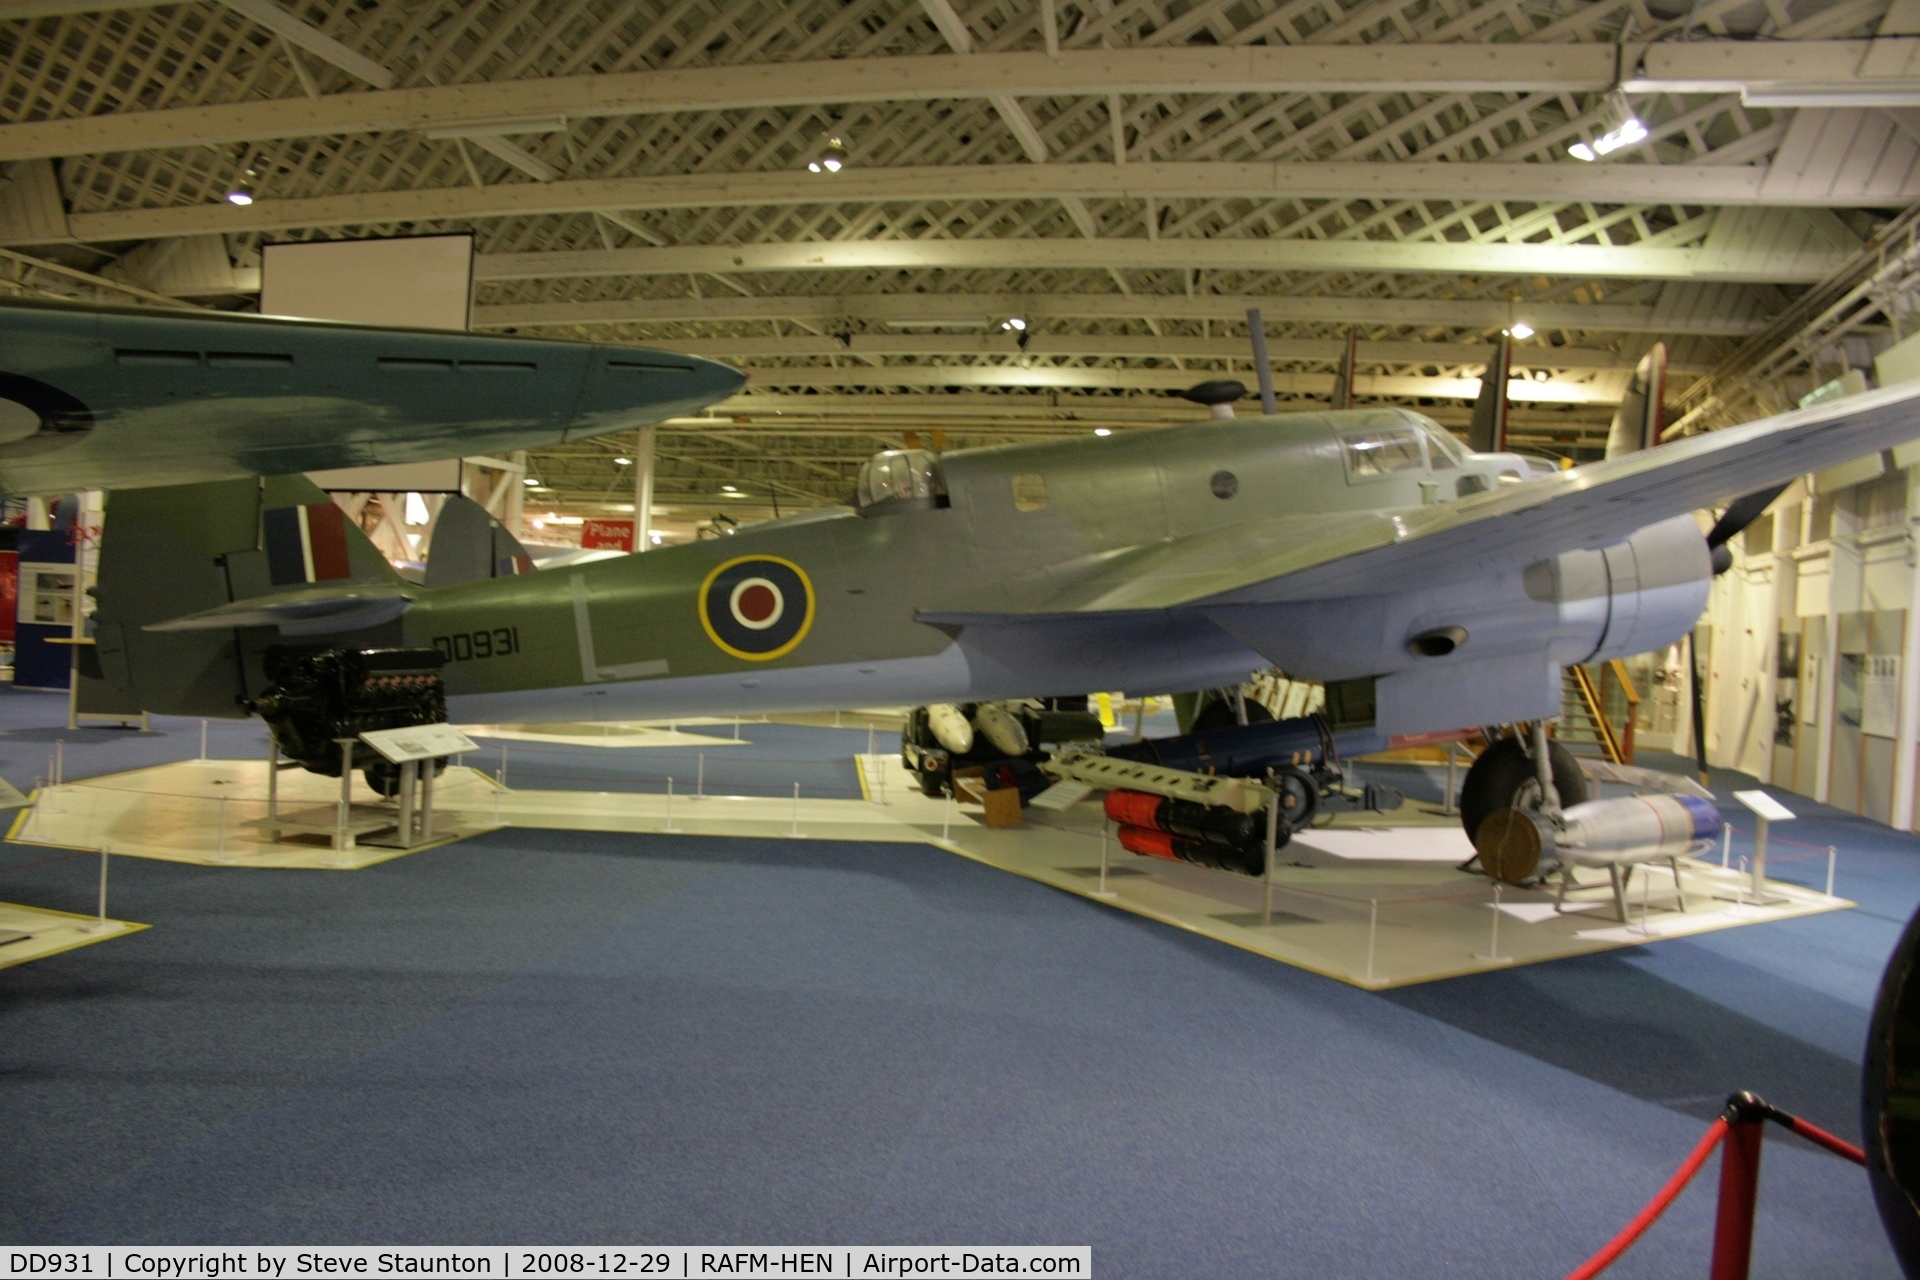 DD931, Bristol Beaufort VIII C/N Composite, Taken at the RAF Museum, Hendon. December 2008